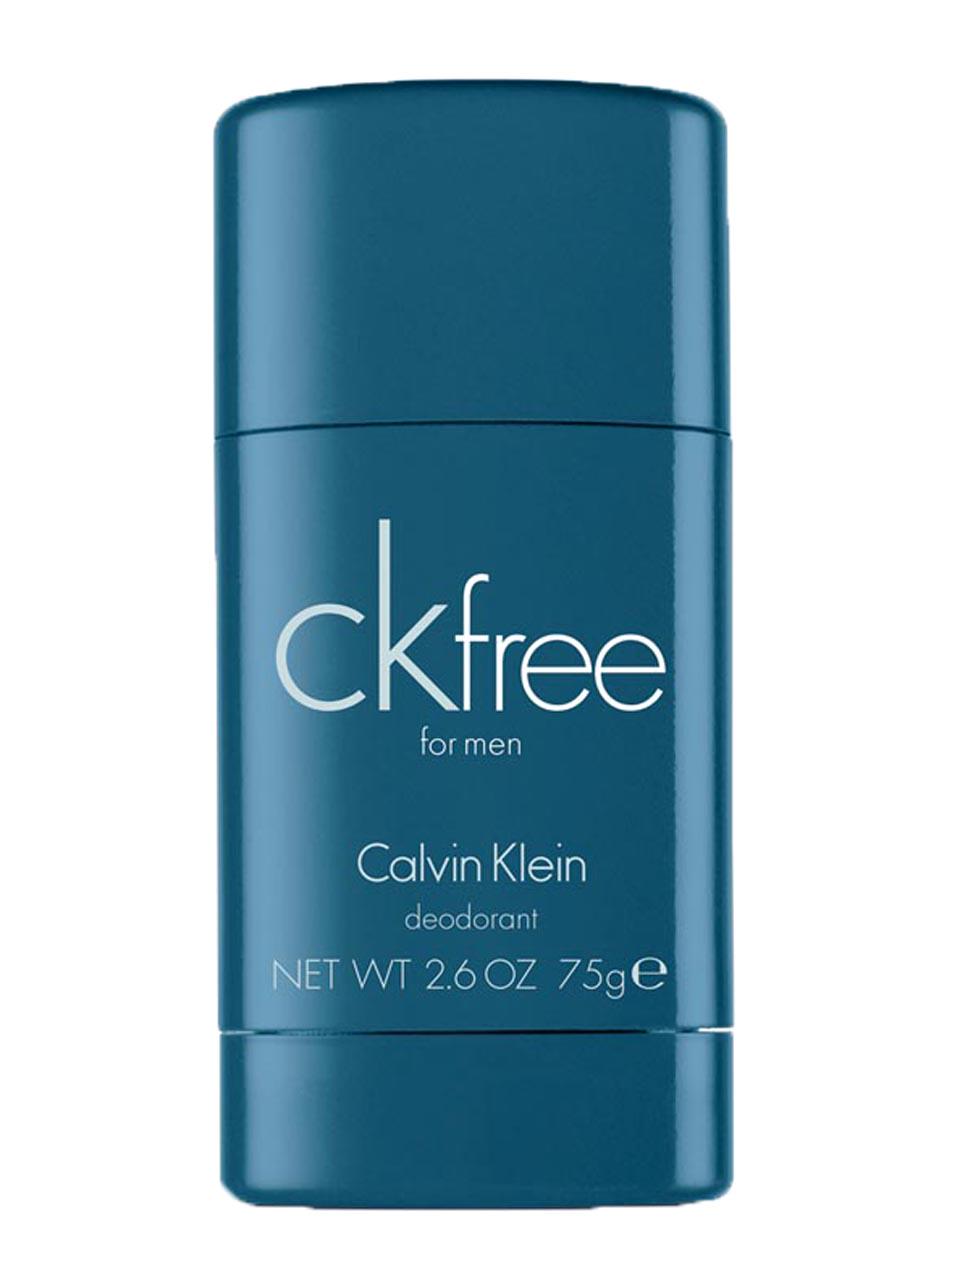 Calvin Klein CK Free Deodorant Stick 75 ml | Frankfurt Airport Online  Shopping